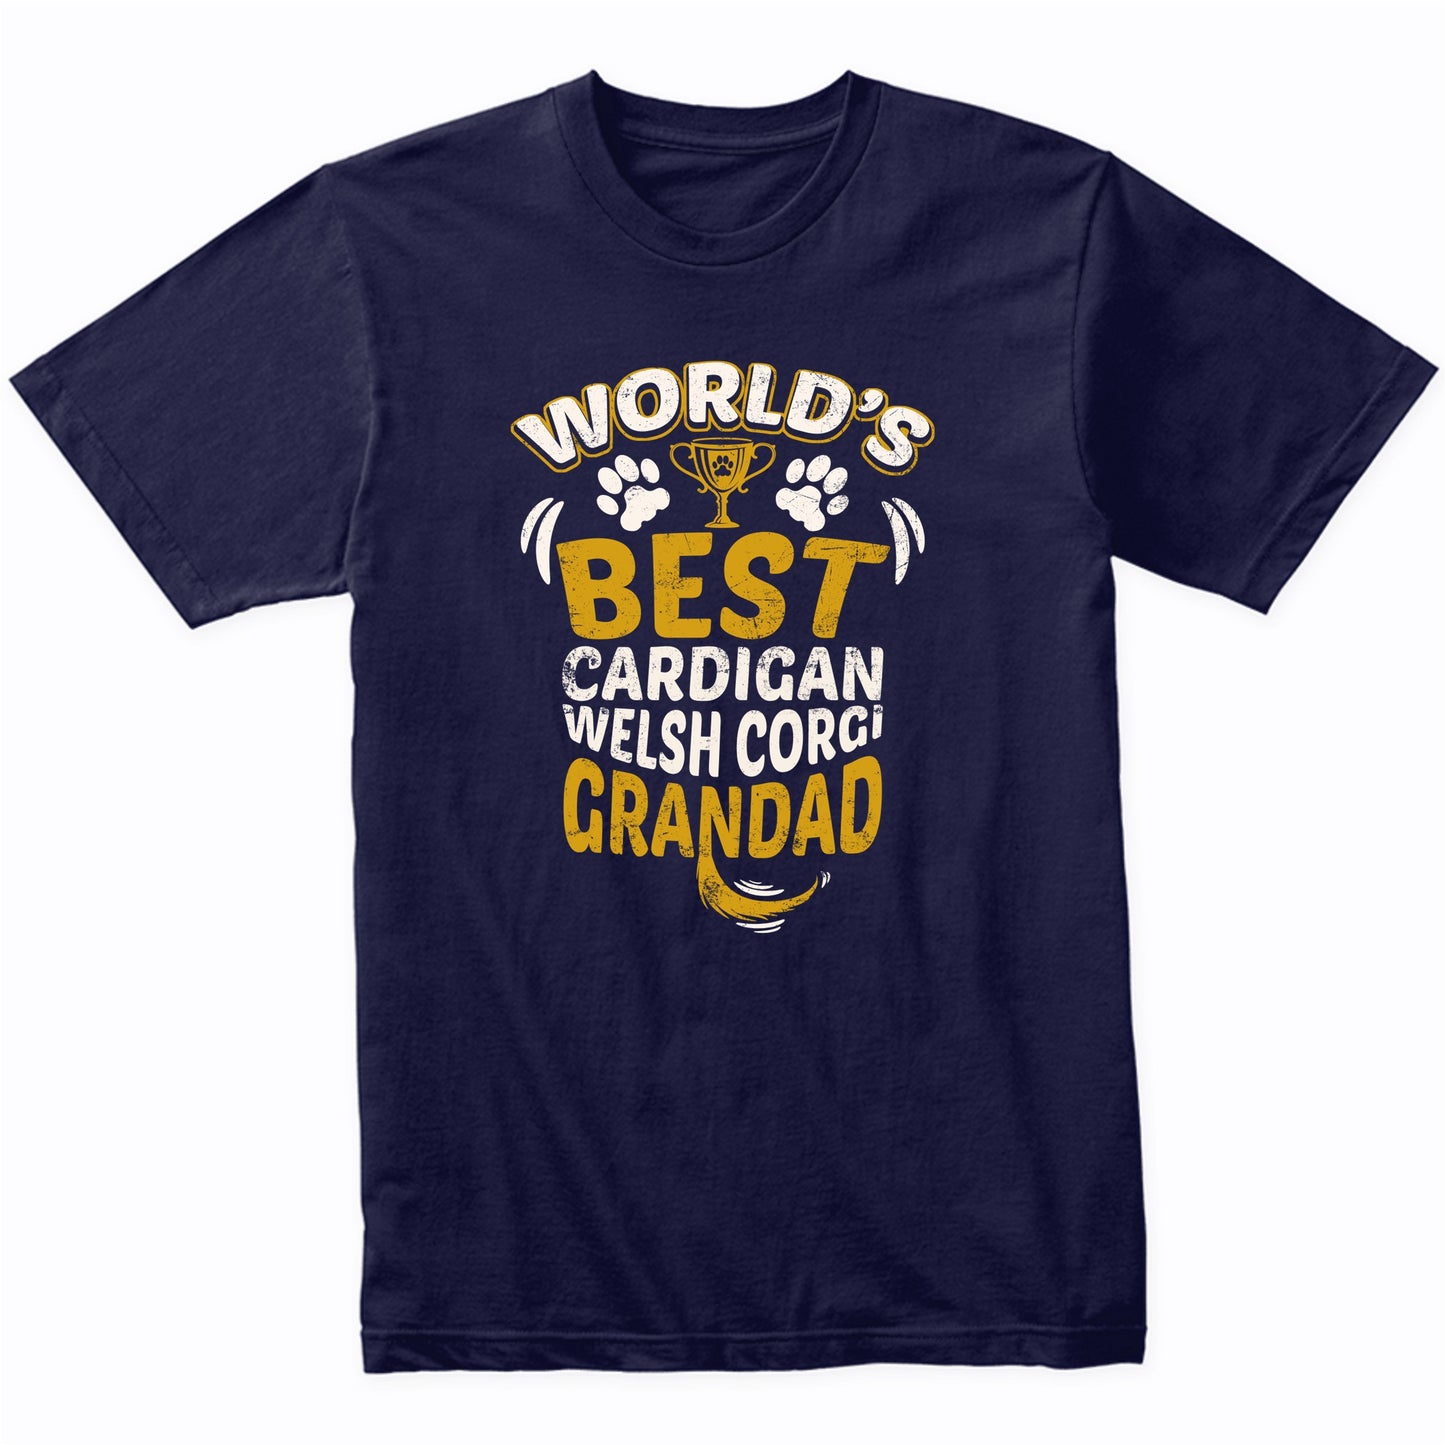 World's Best Cardigan Welsh Corgi Grandad Graphic T-Shirt